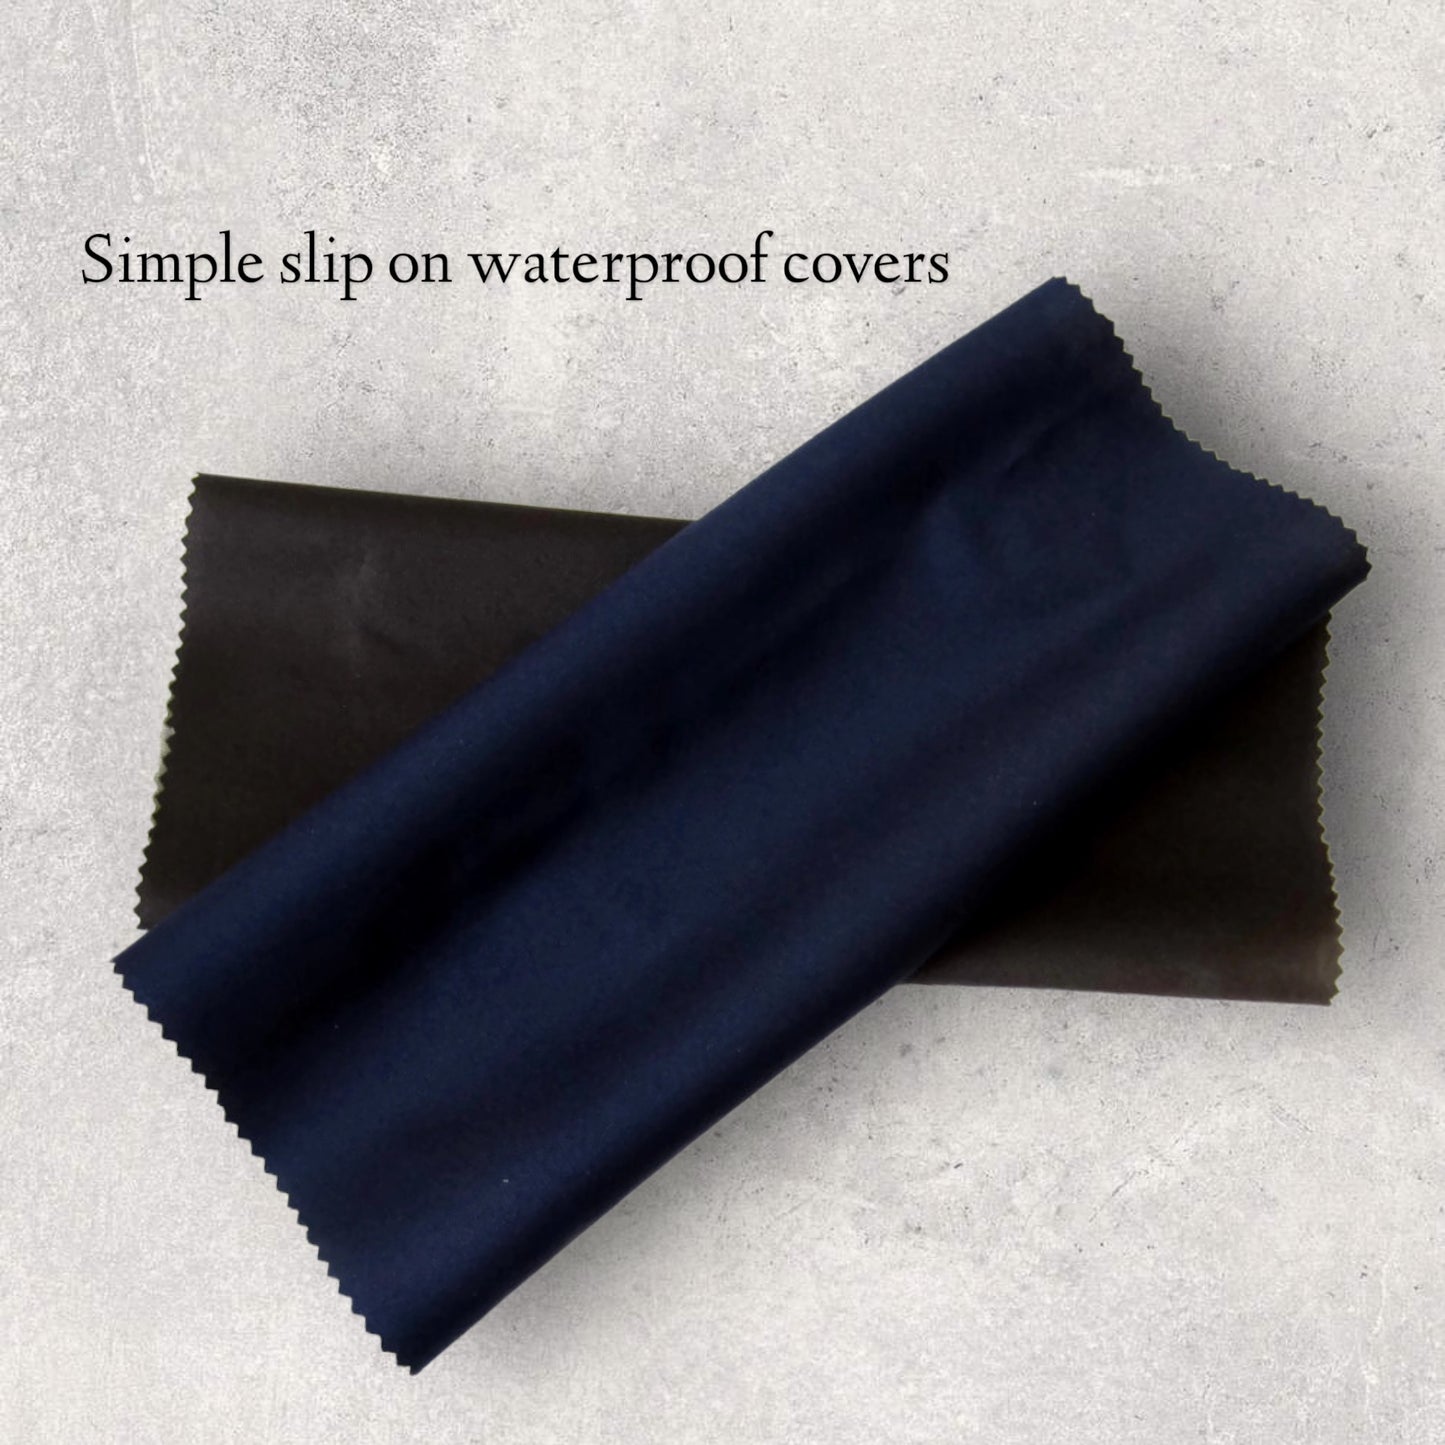 Shampoo Bowl Neck Cushion, Supreme Foam Neck Rest Pillow for Salon Hair Wash Sink Basin Accessories